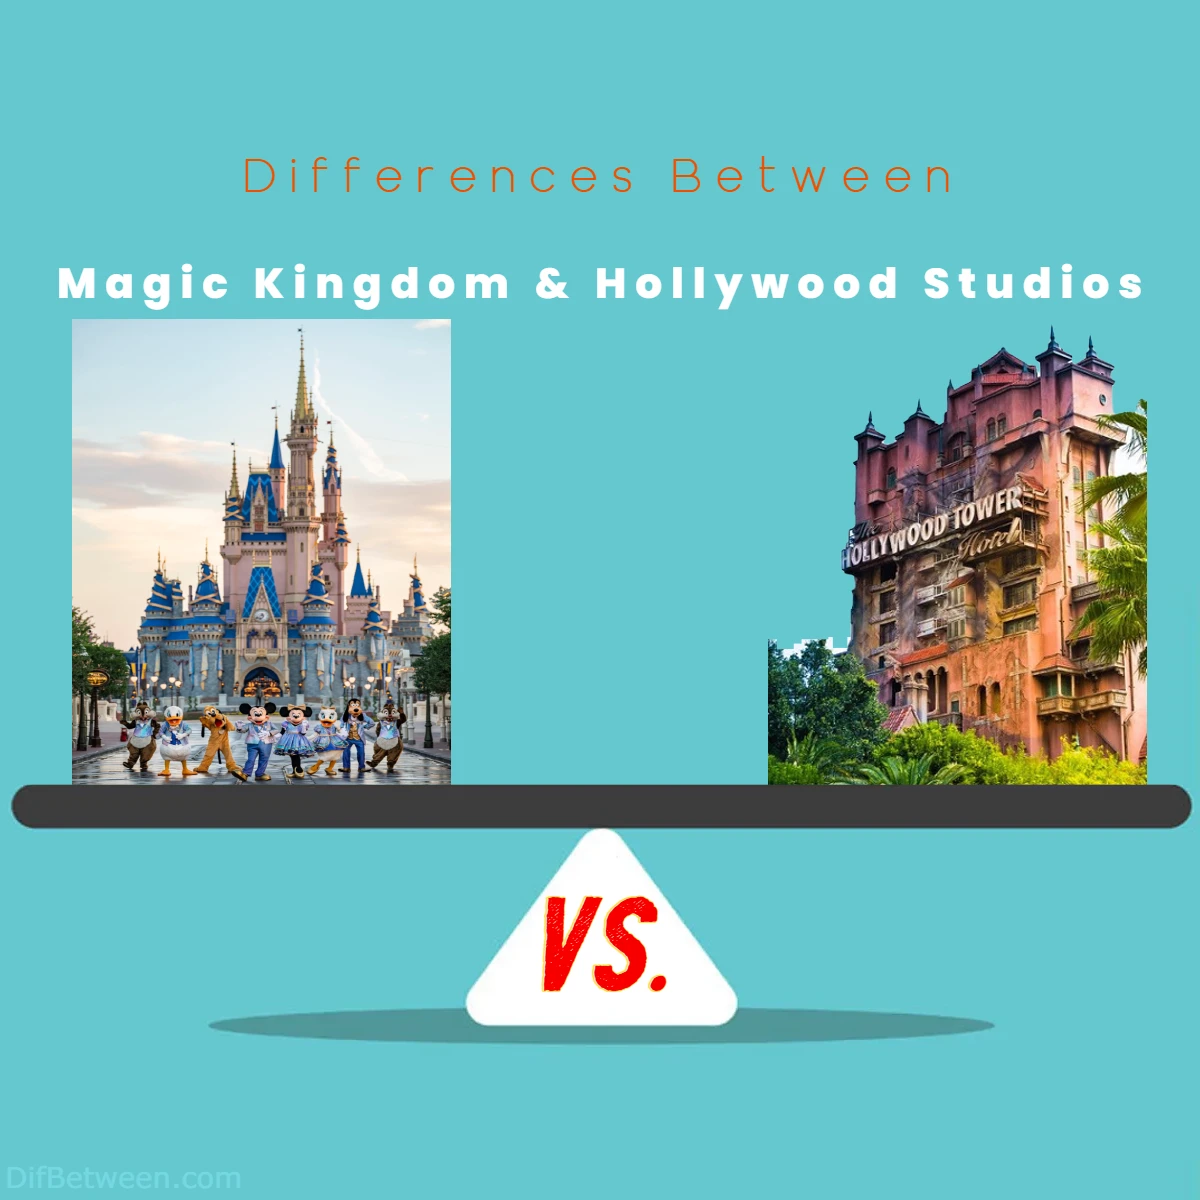 Differences Between Magic Kingdom vs Hollywood Studios